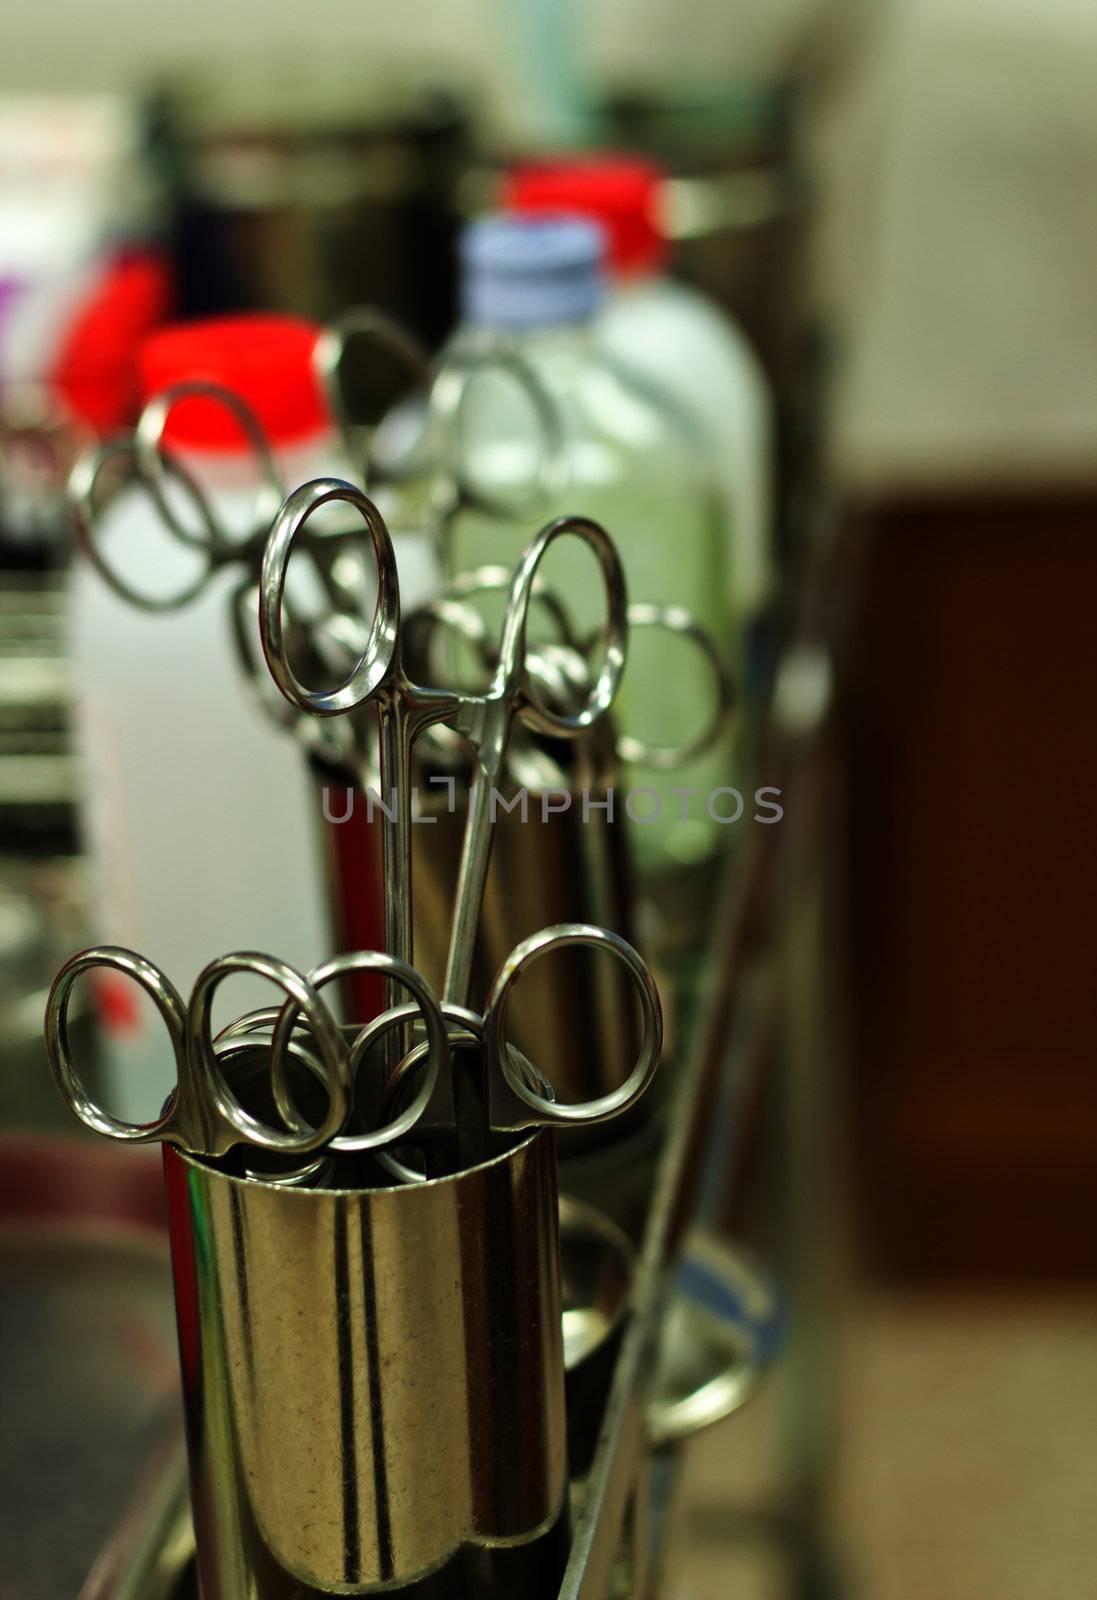 Scissors for physicians or Medical instruments for ENT doctor